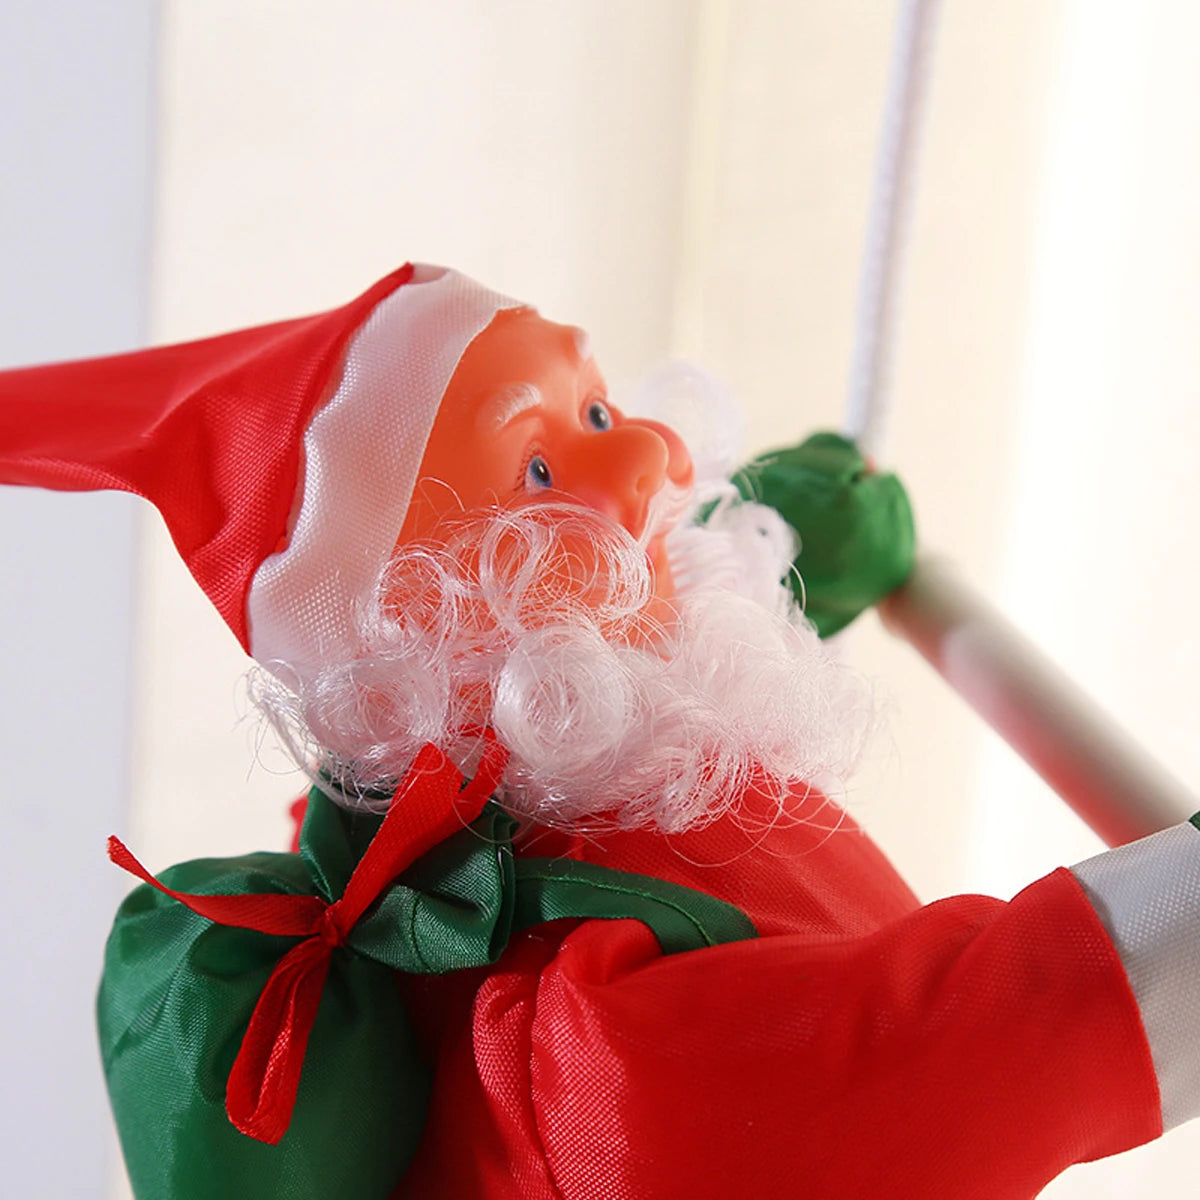 Santa Claus Climbing Doll Festive Hanging Xmas Ornament Toy